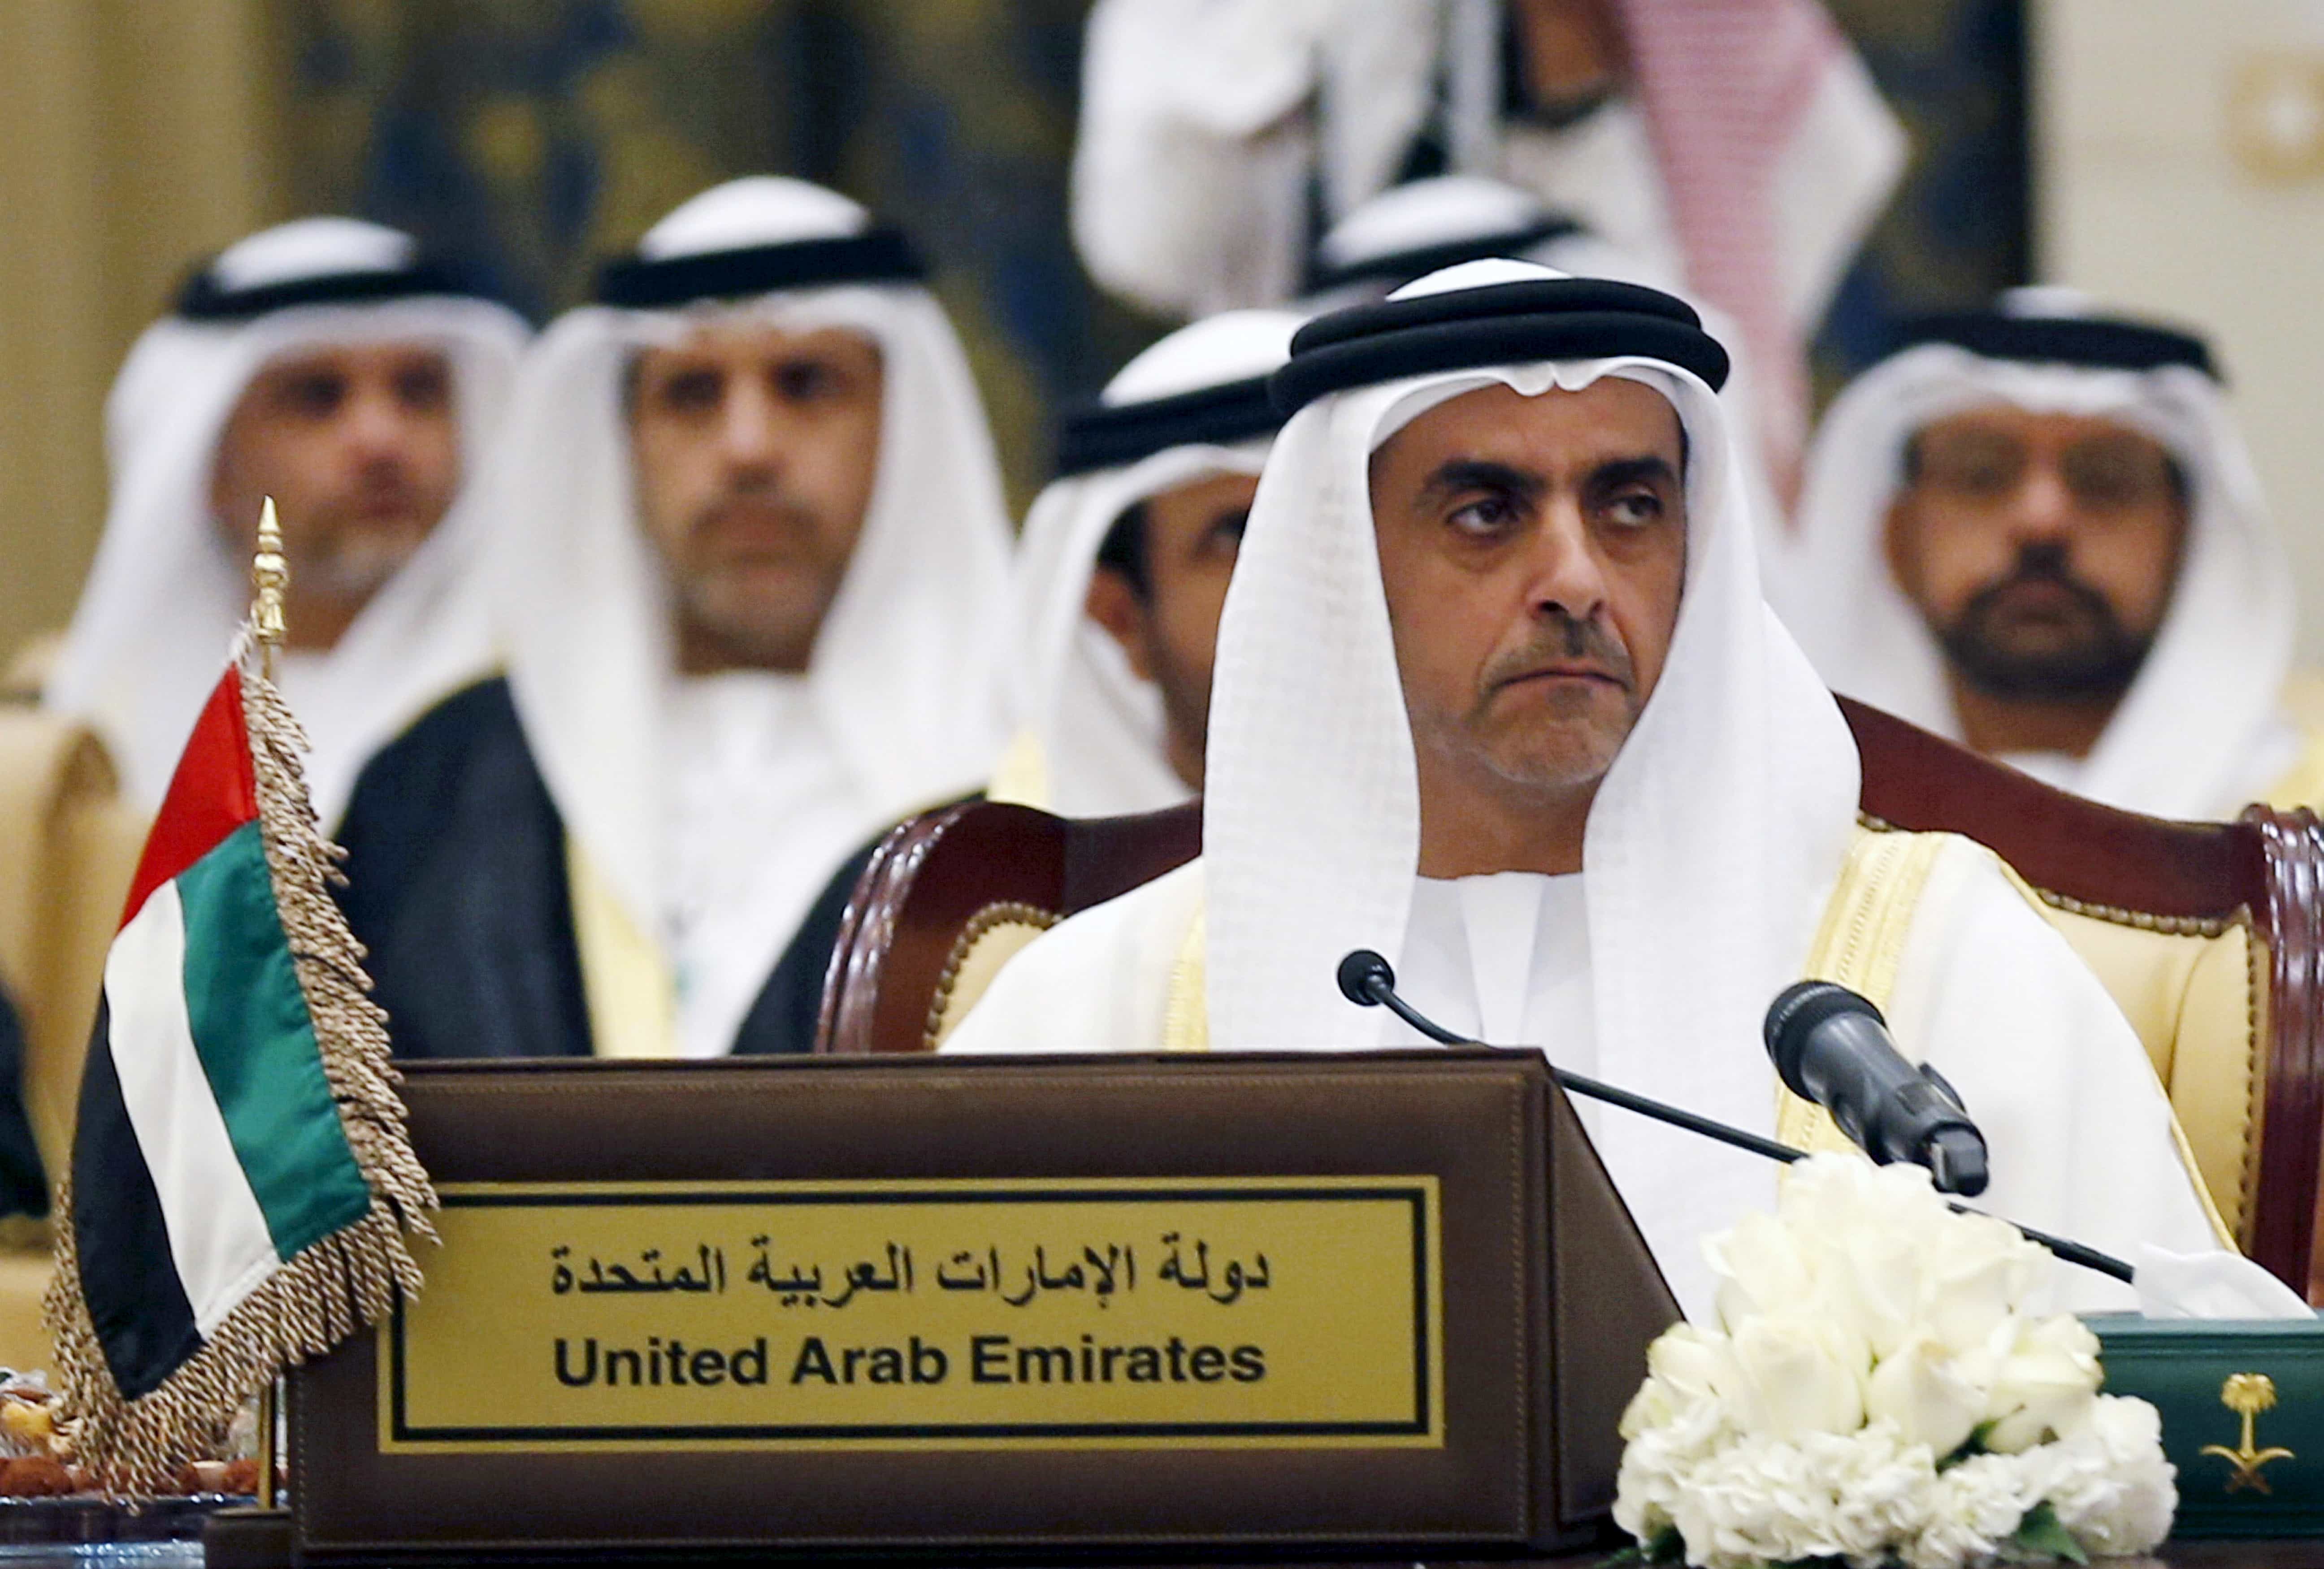 UAE'S Interior Minister Sheikh Saif bin Zayed al-Nahyan attends the meeting of Gulf Cooperation Council (GCC) Interior Ministers in Riyadh, Saudi Arabia, April 27, 2016, REUTERS/Faisal Al Nasser